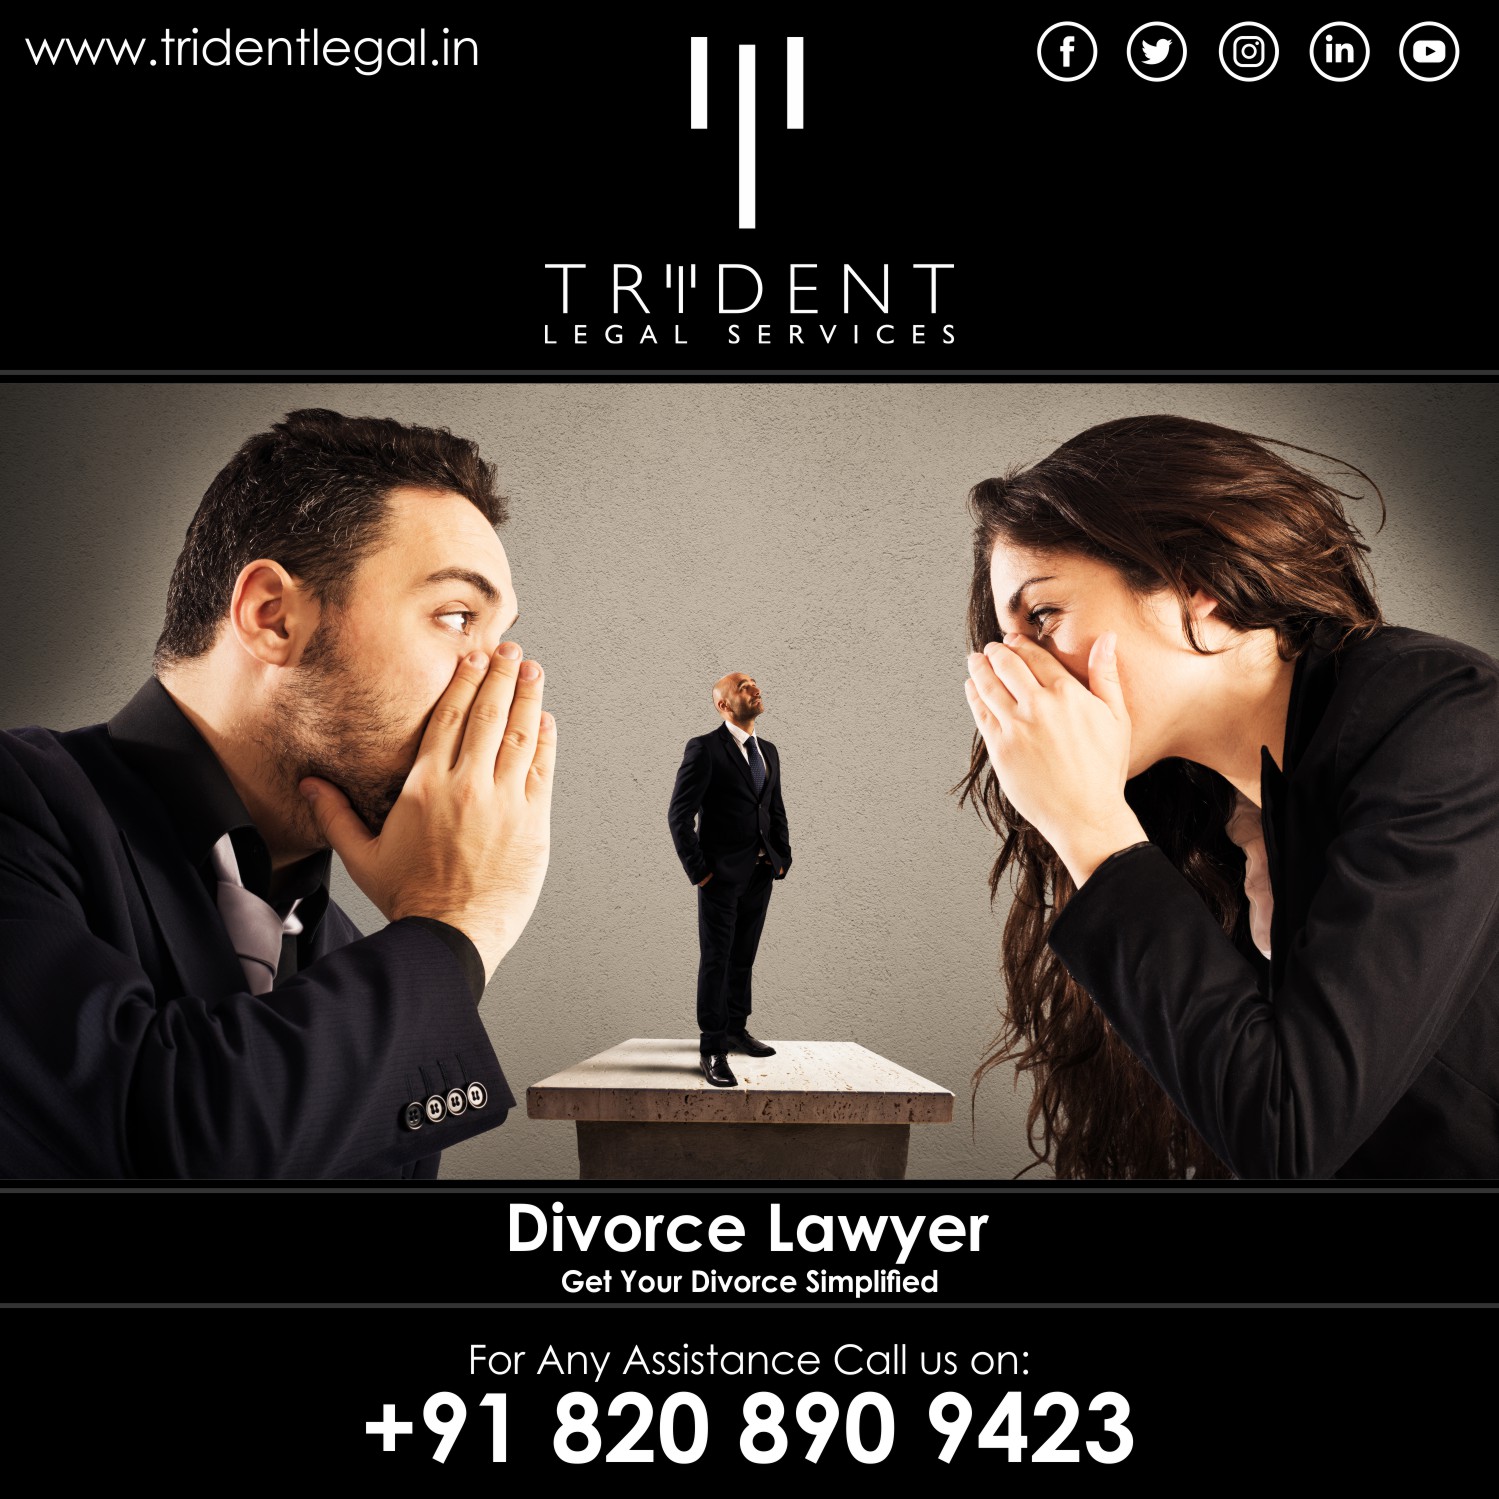 Divorce Lawyer in Pune